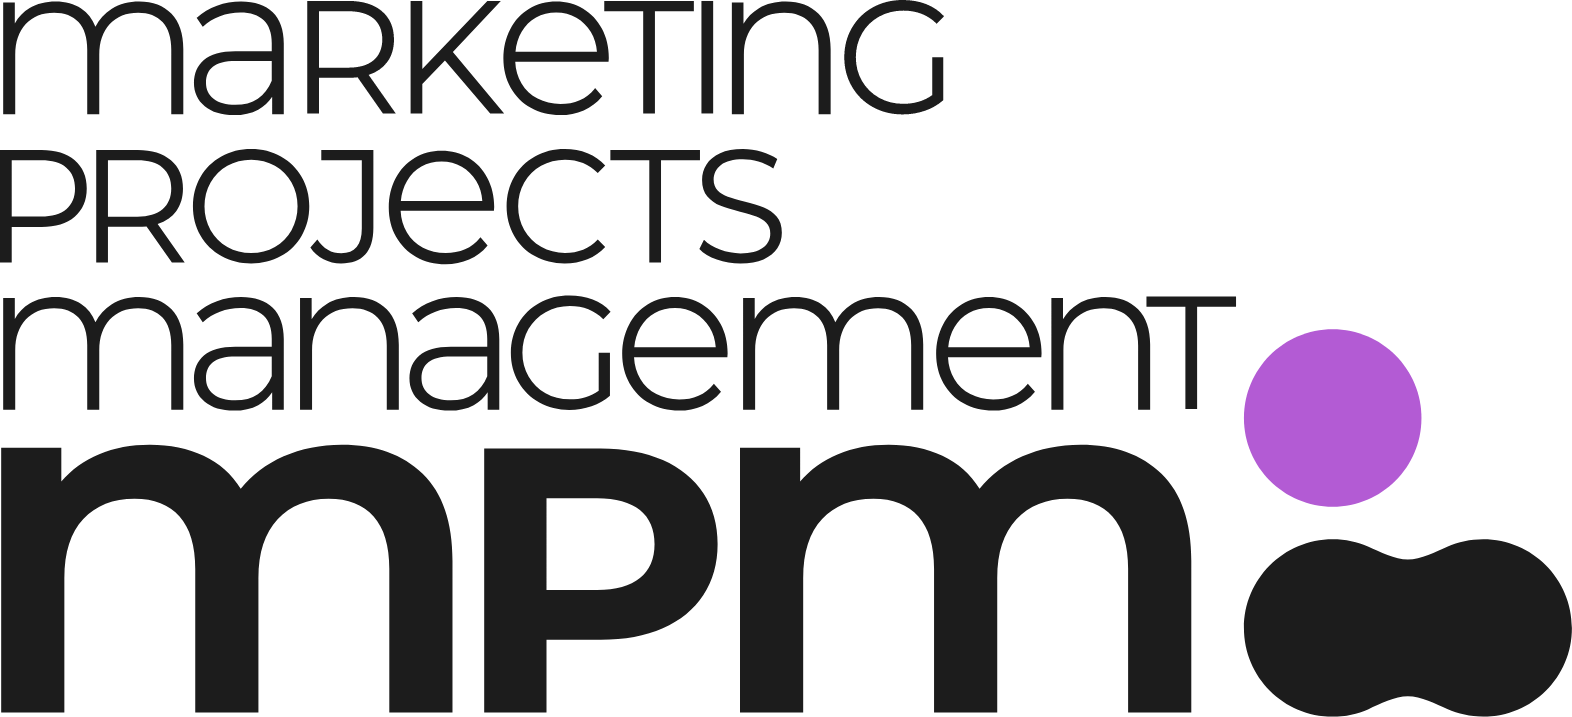 logo MPM